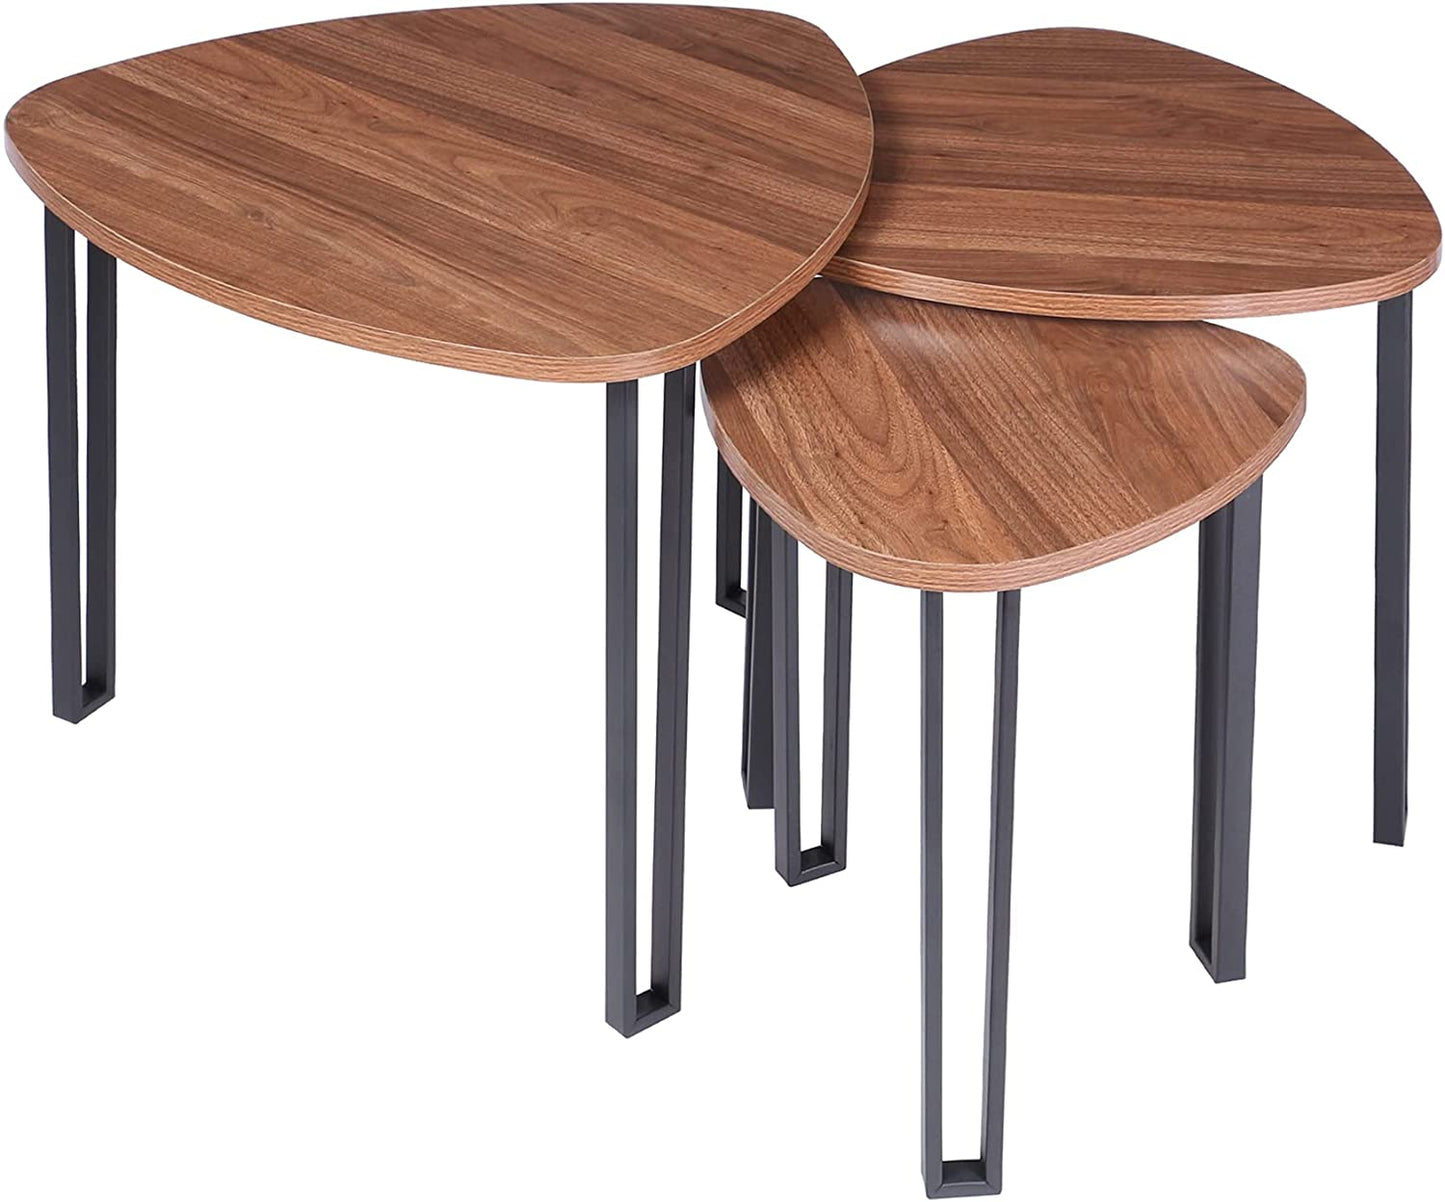 Set of Triangle Table Wood/Metal Coffee Living Room End Tea Nesting Tables Angled Legs